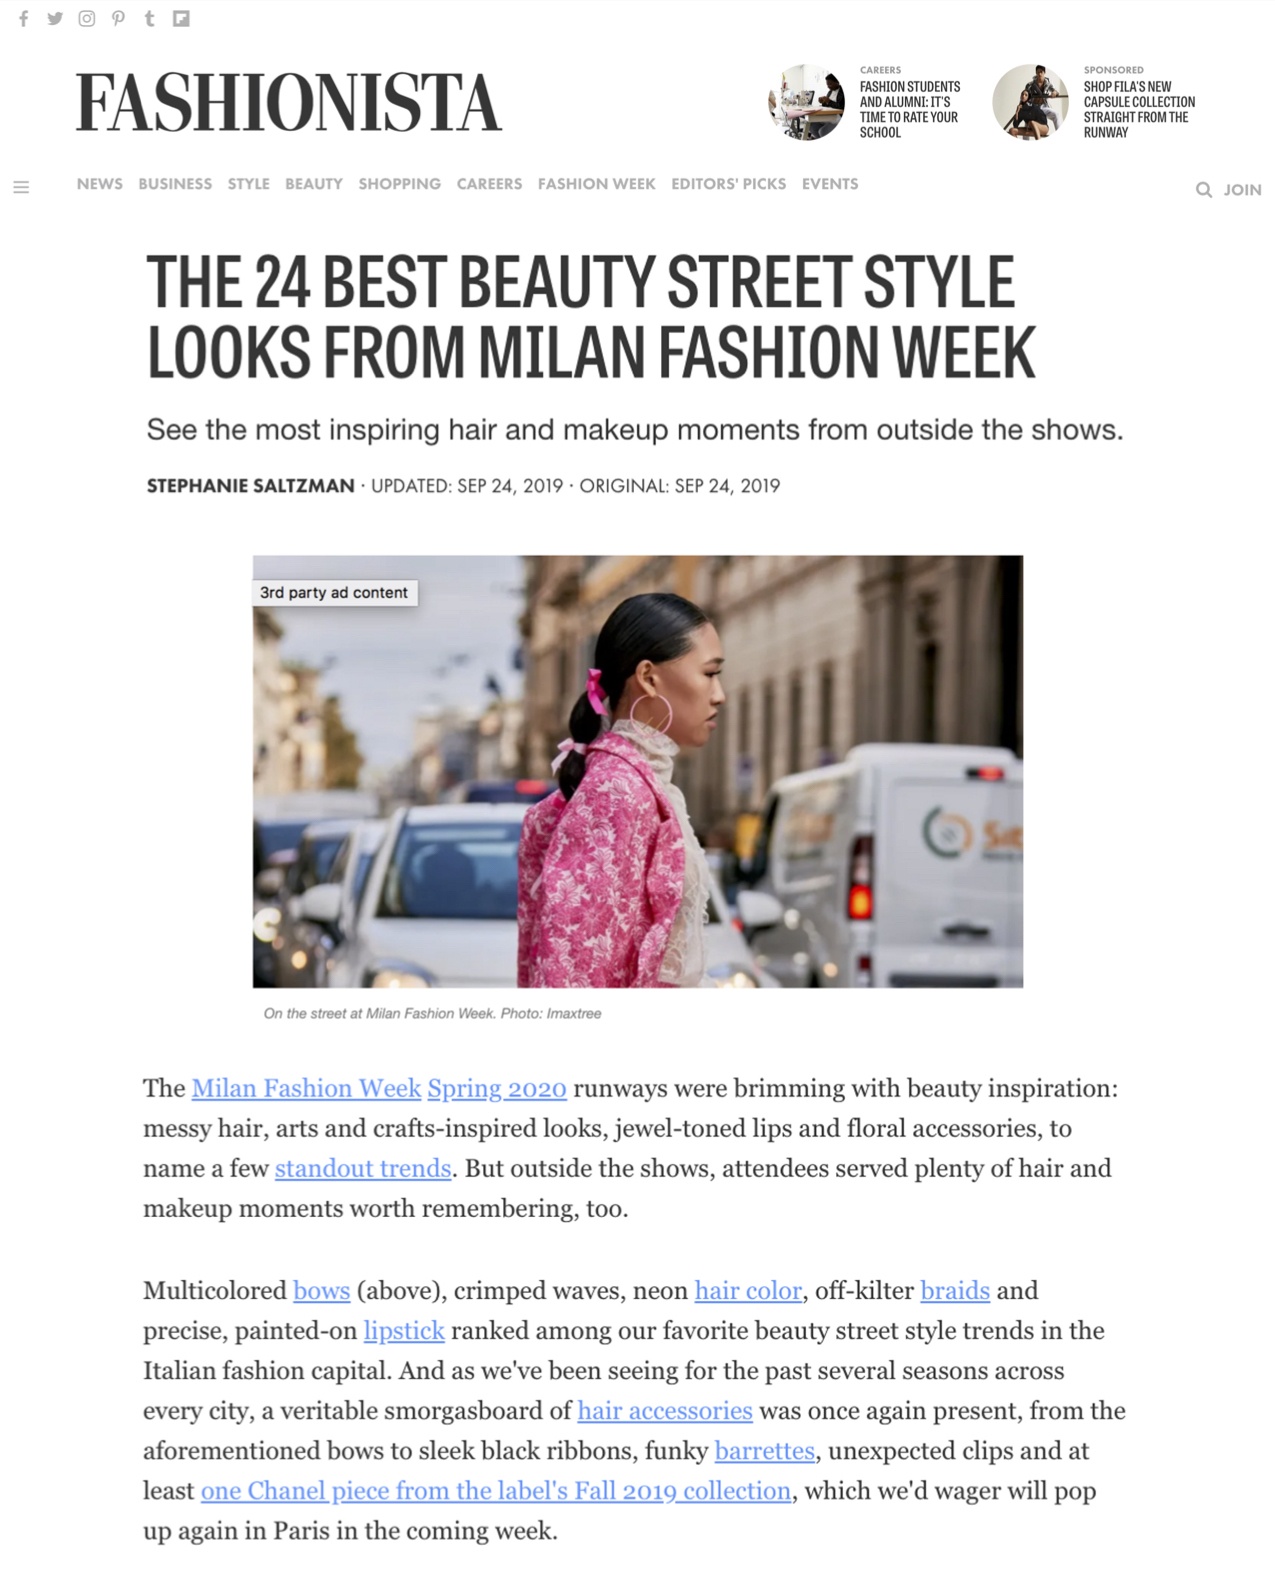 Fashionista: The 24 Best Beauty Street Style Looks From Milan Fashion Week